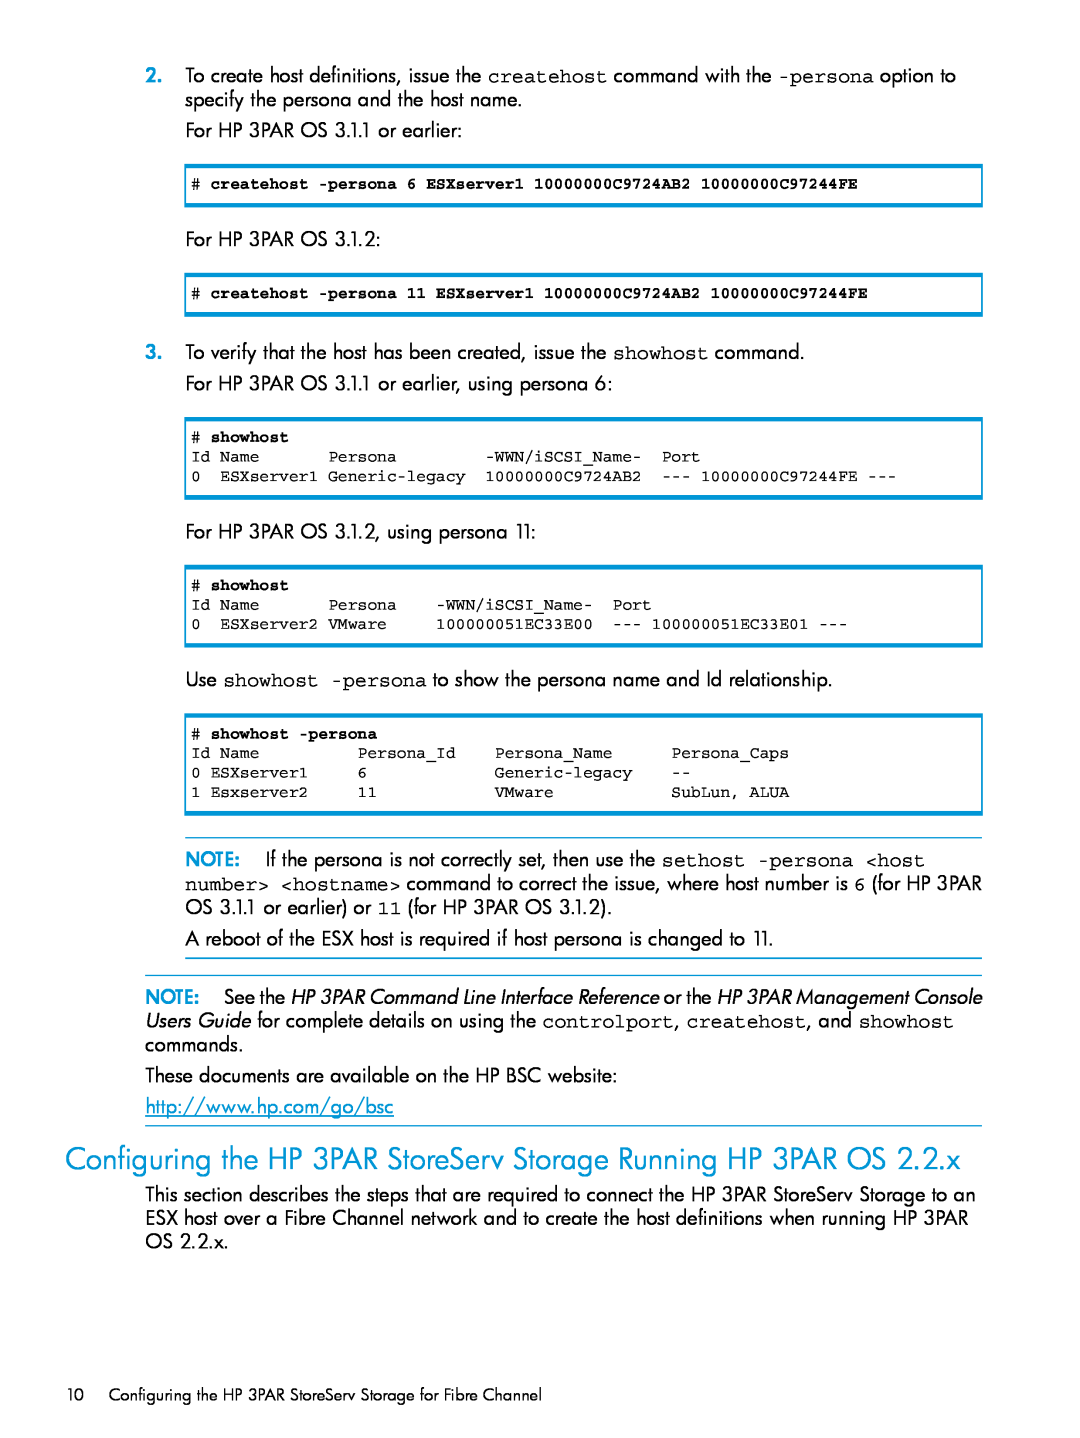 HP QR516B manual Configuring the HP 3PAR StoreServ Storage Running HP 3PAR OS 